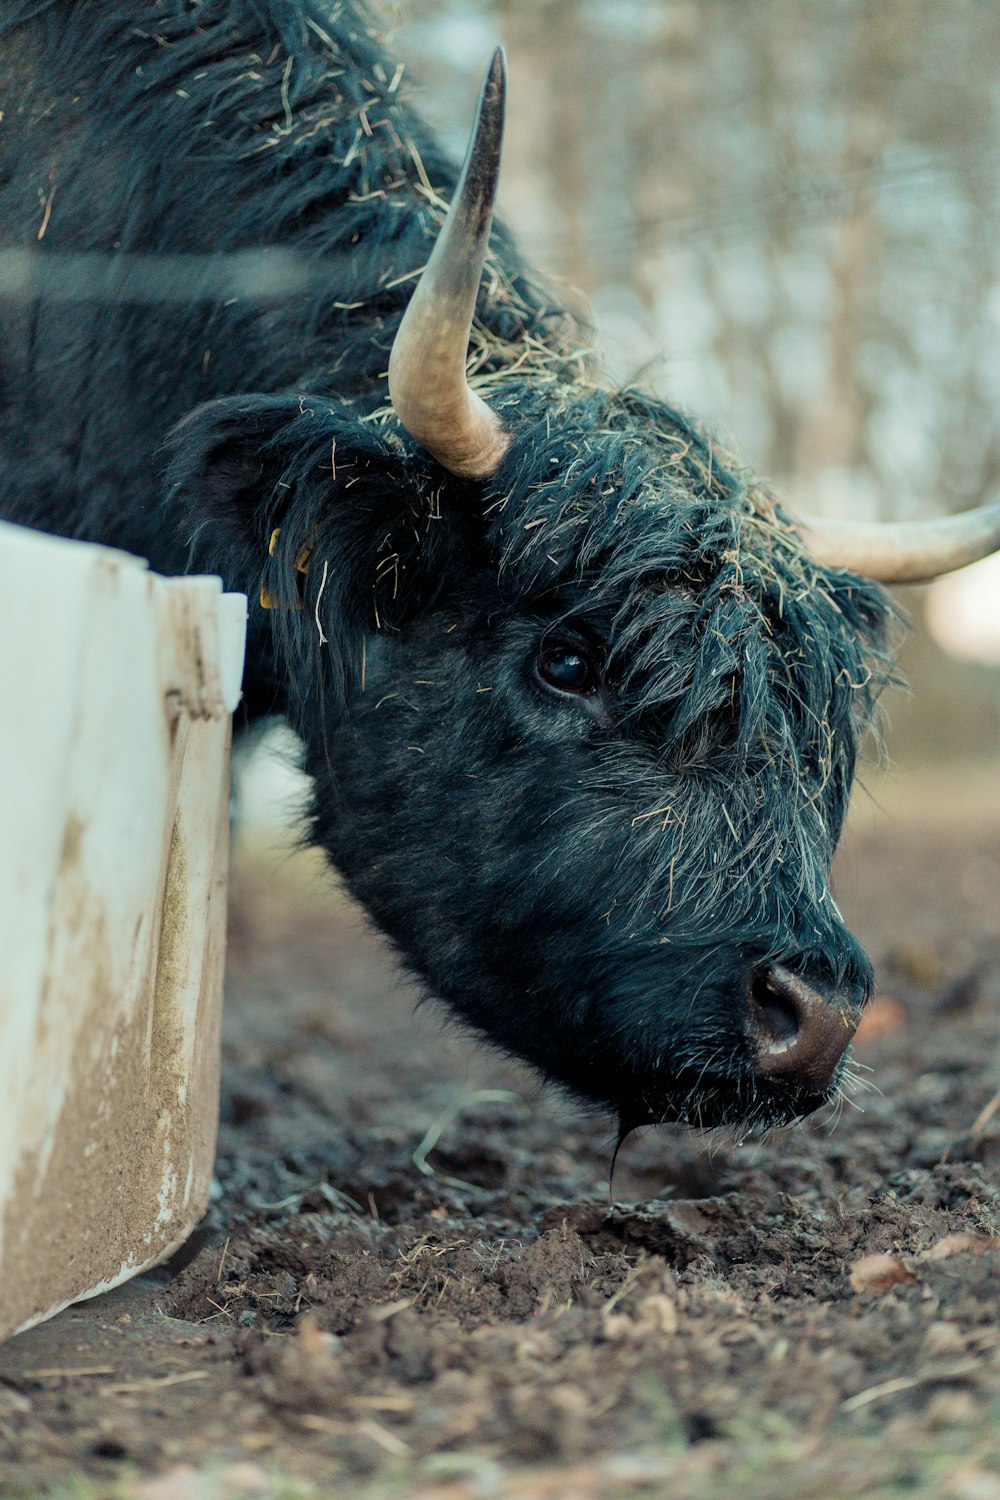 a close up of a bull in a field